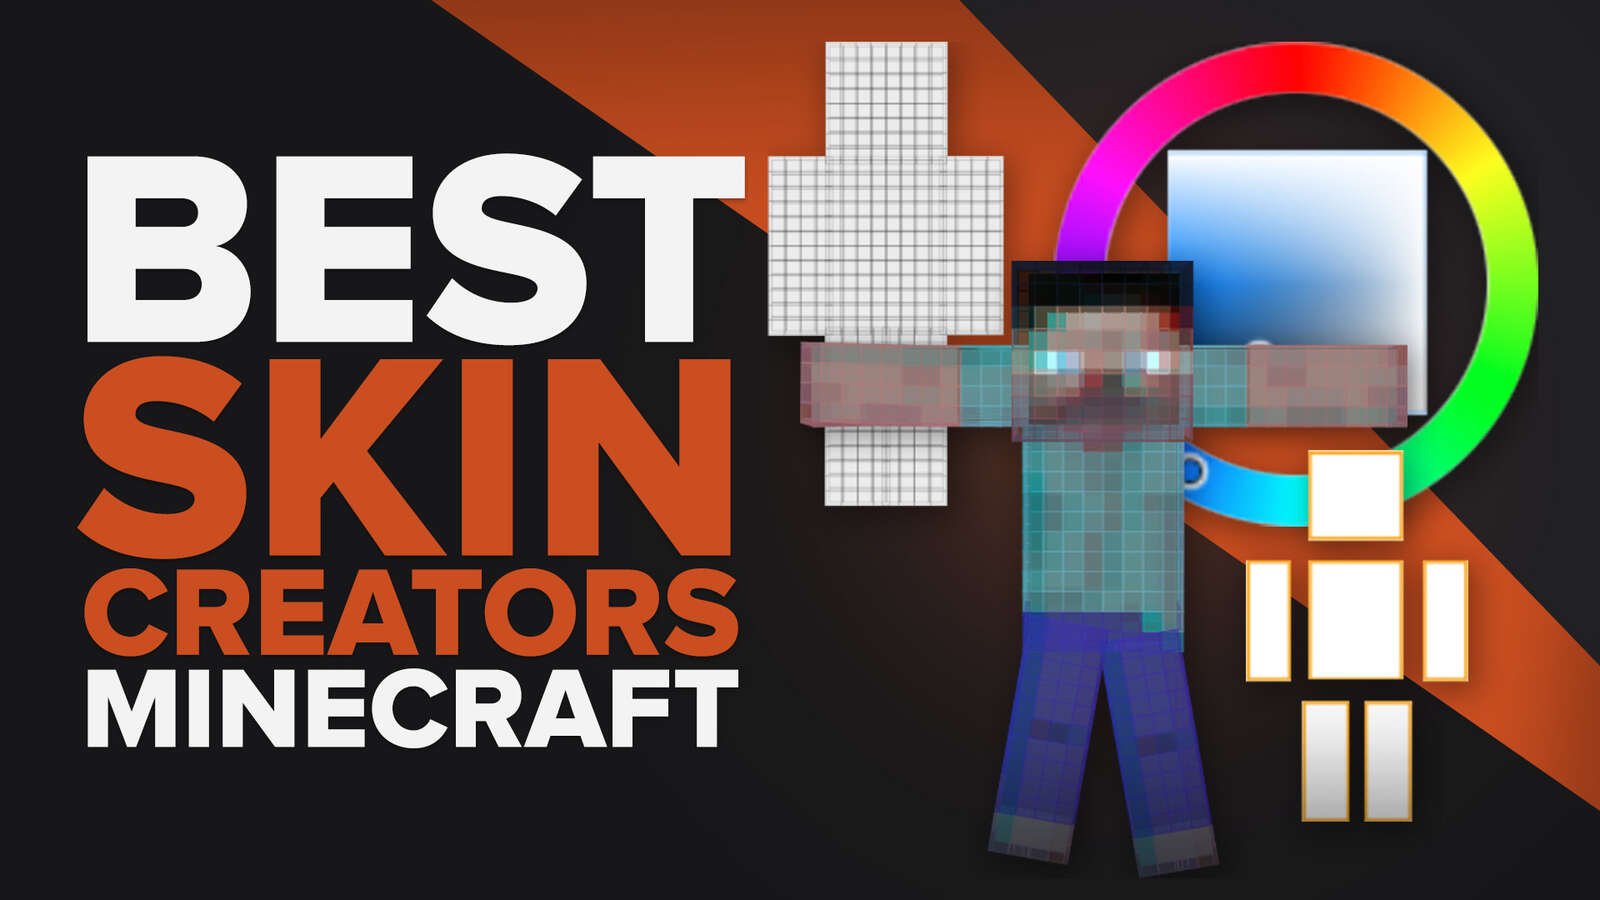 5 Best Skin Creators for Minecraft